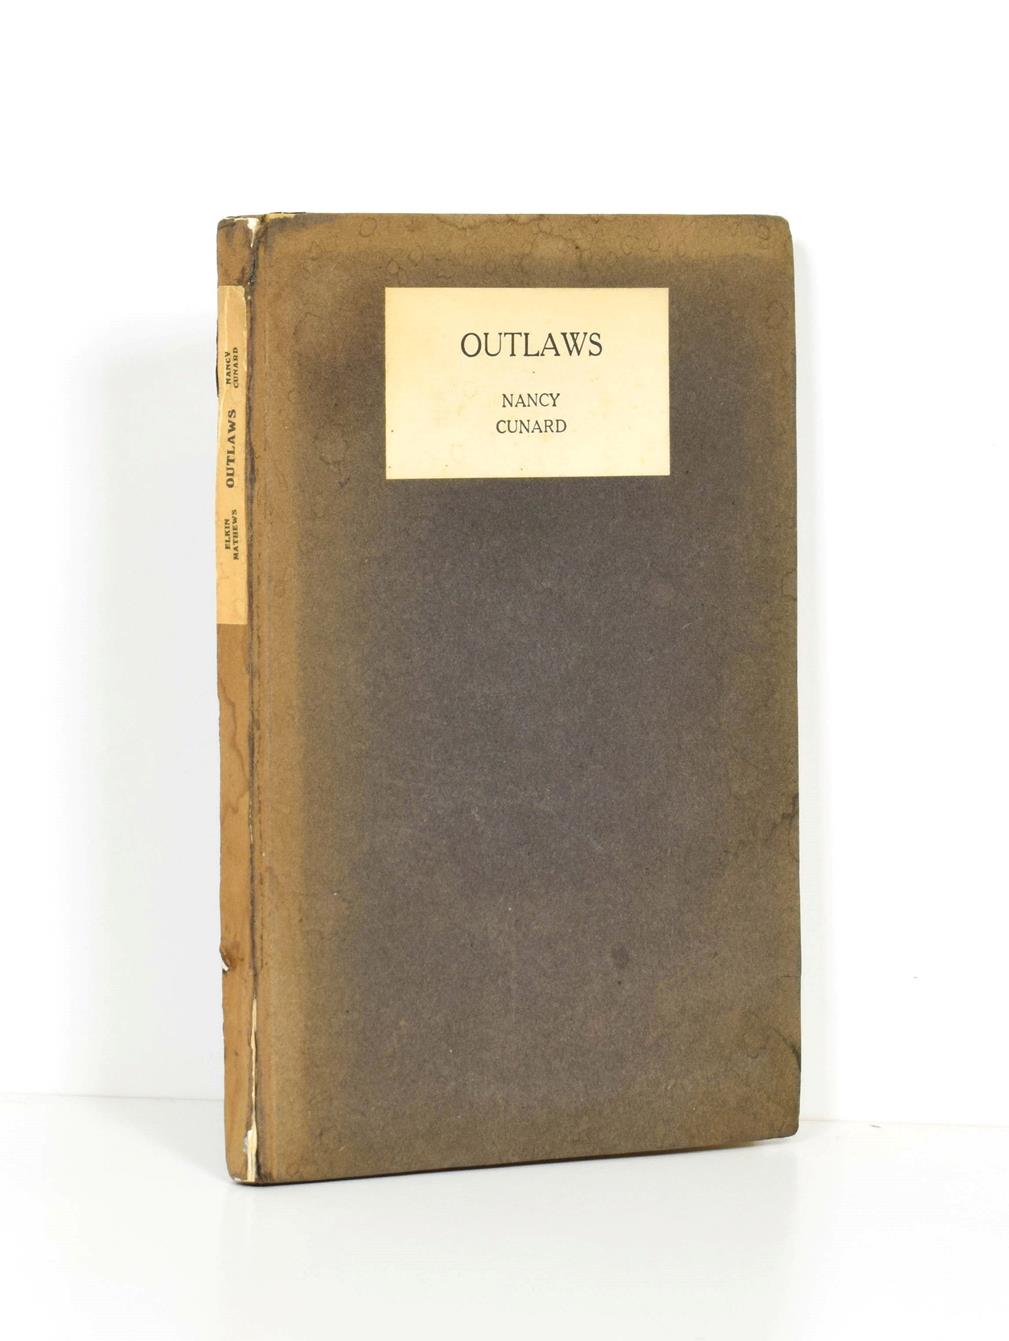 Lot 67 - Cunard (Nancy) Outlaws, Elkin Mathews, 1921, first edition, original boards (wear to spine)